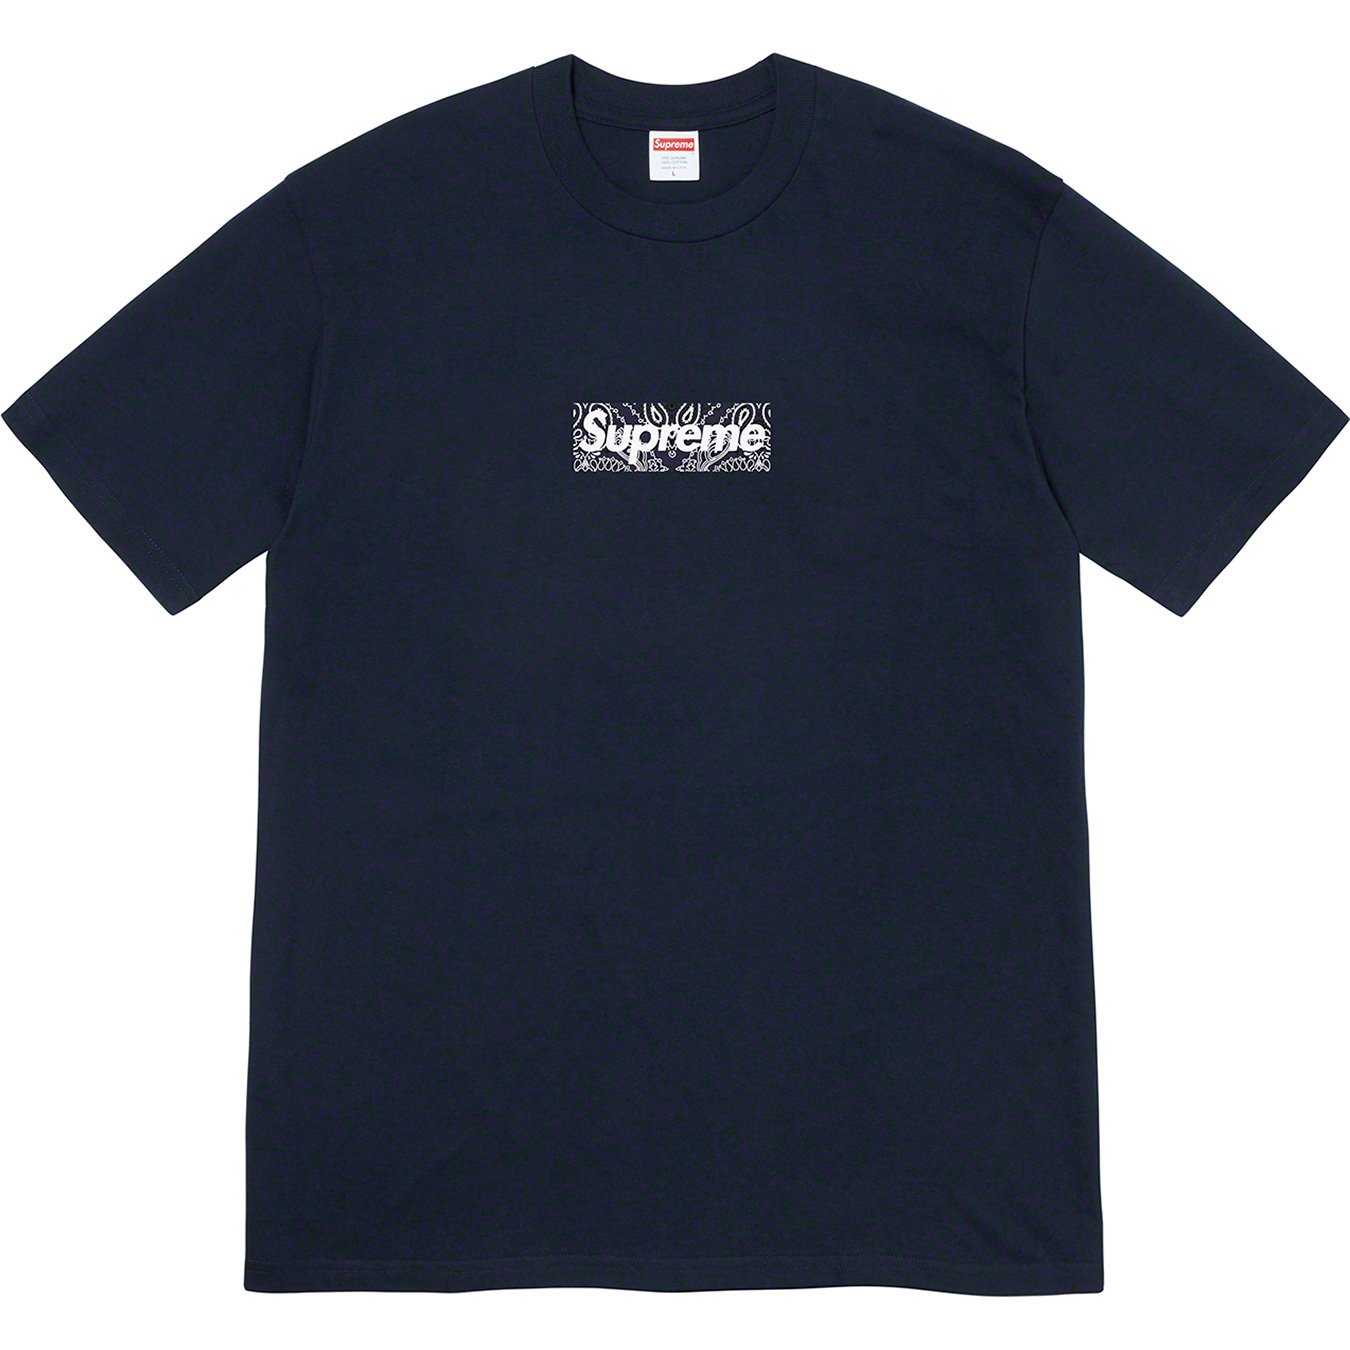 Supreme Bandana Box Logo T-Shirt - Red